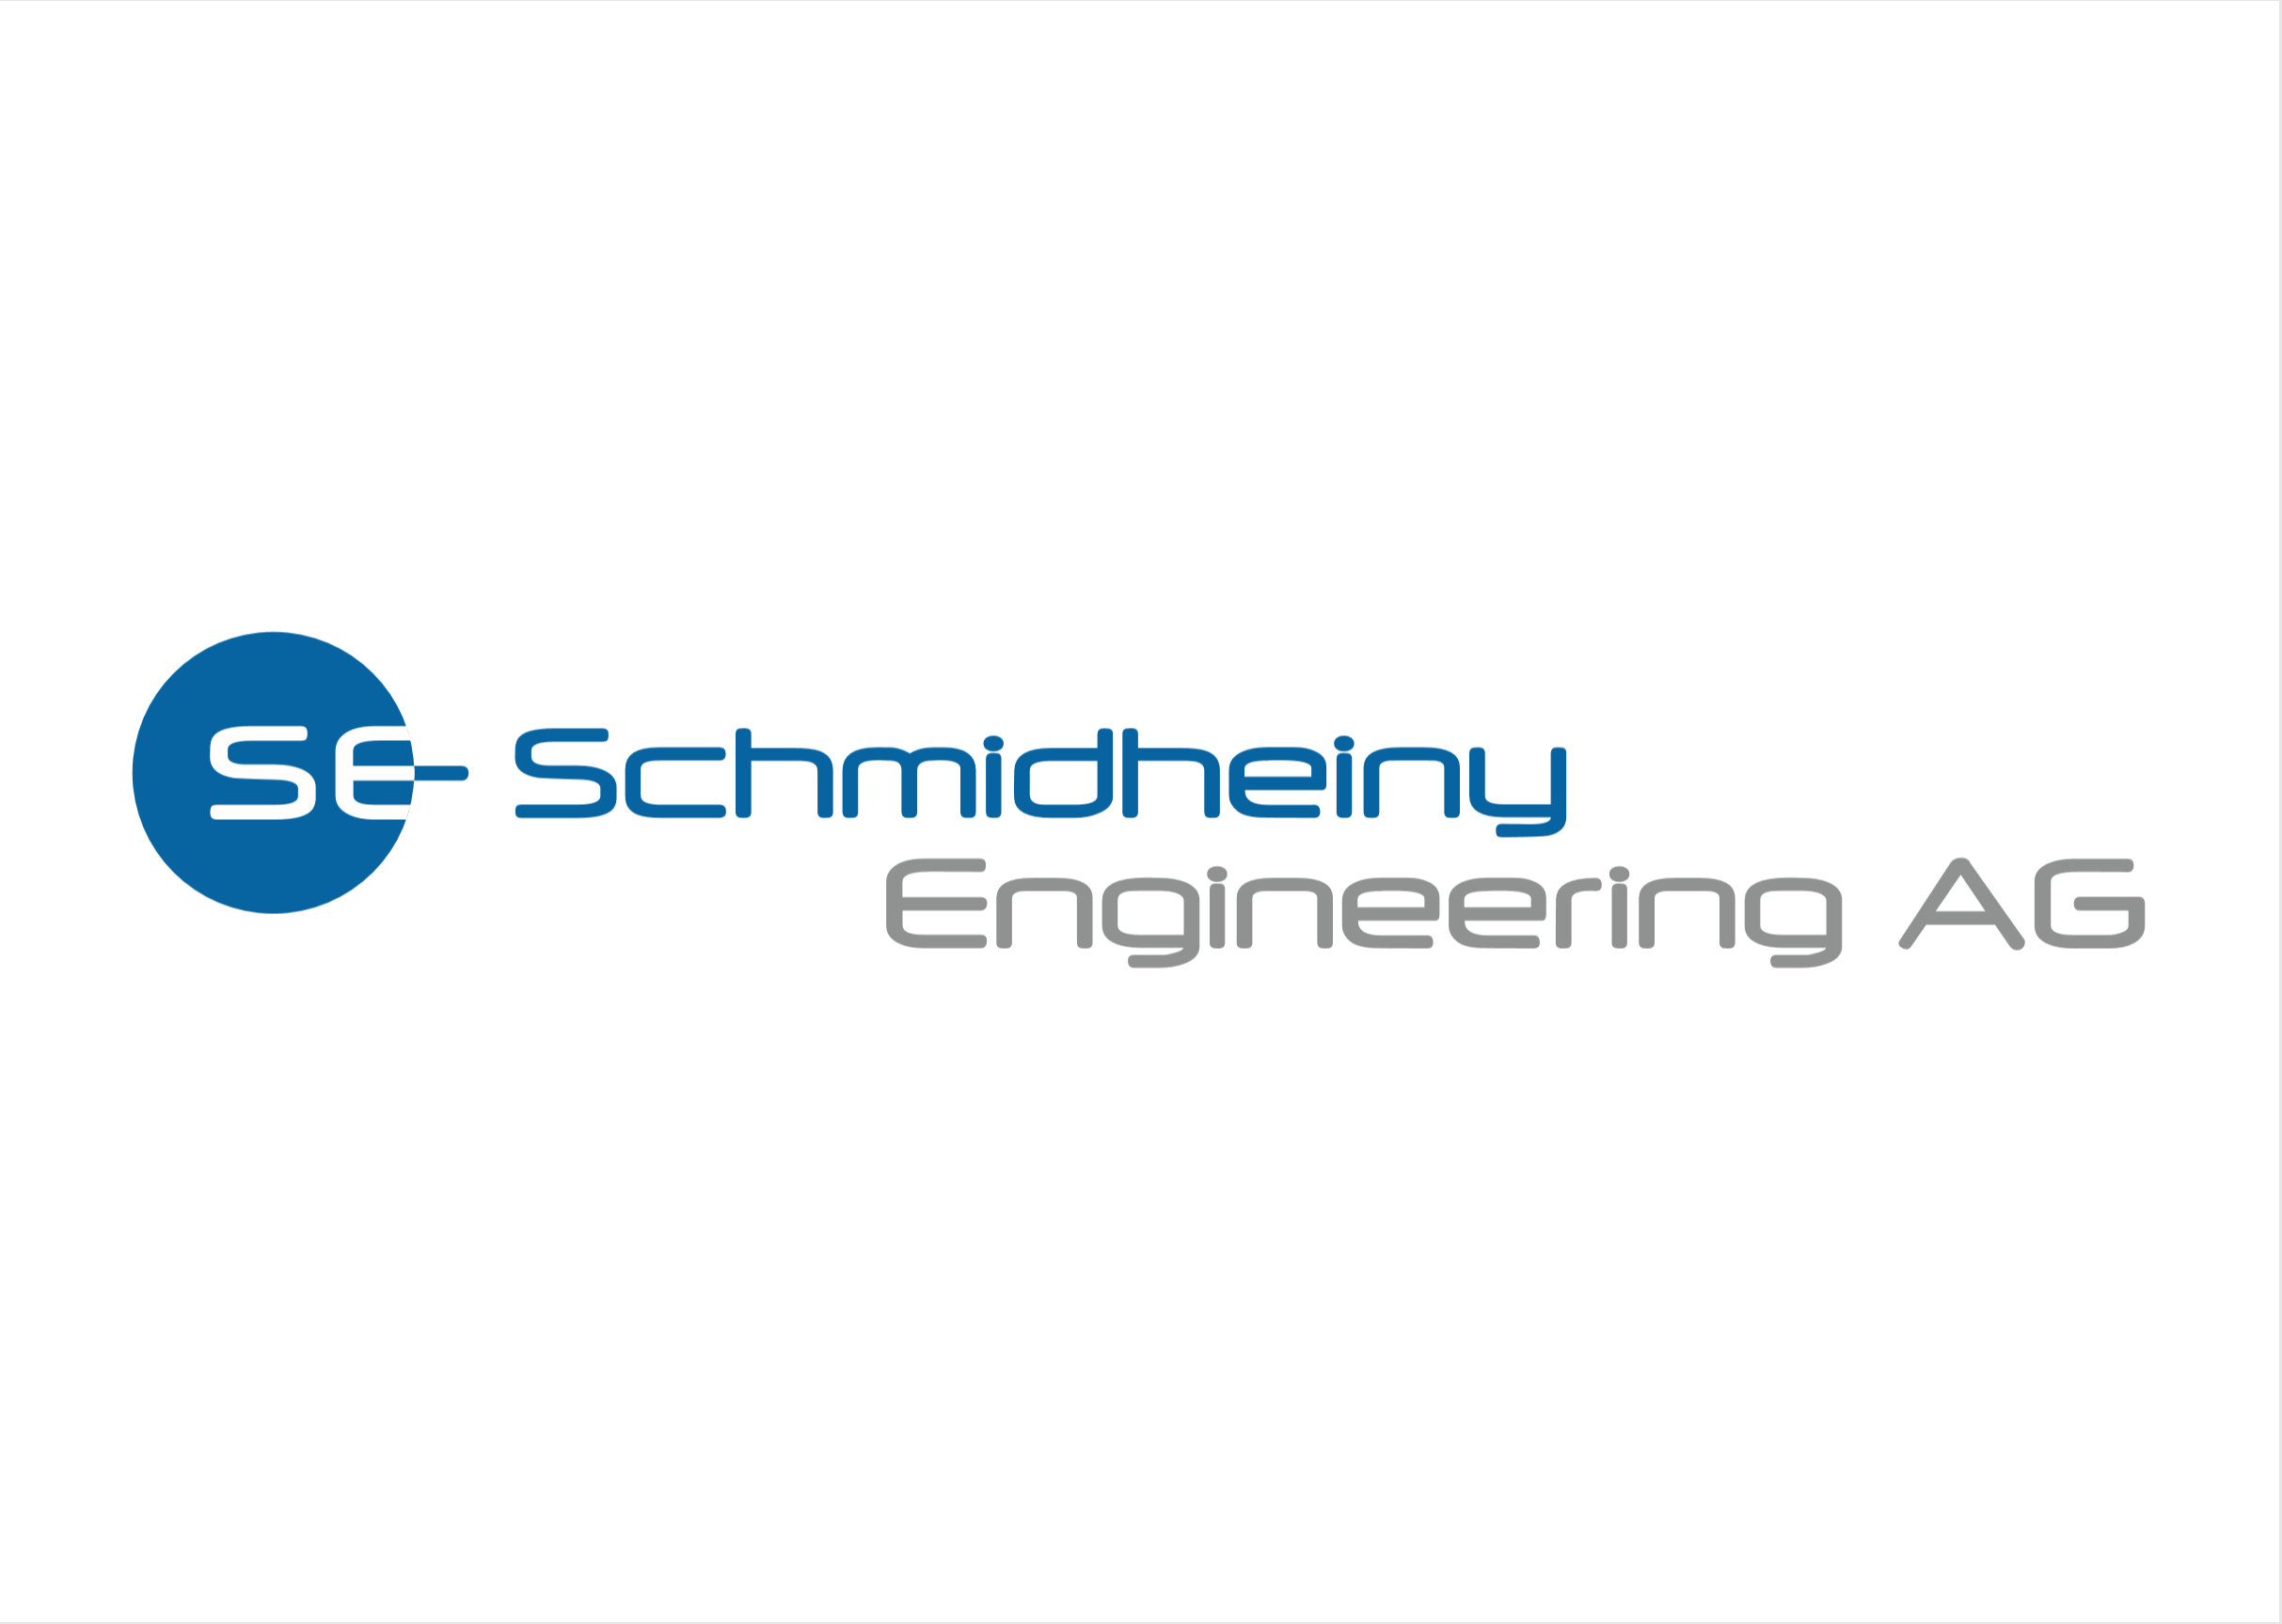 Schmidheiny Engineering AG